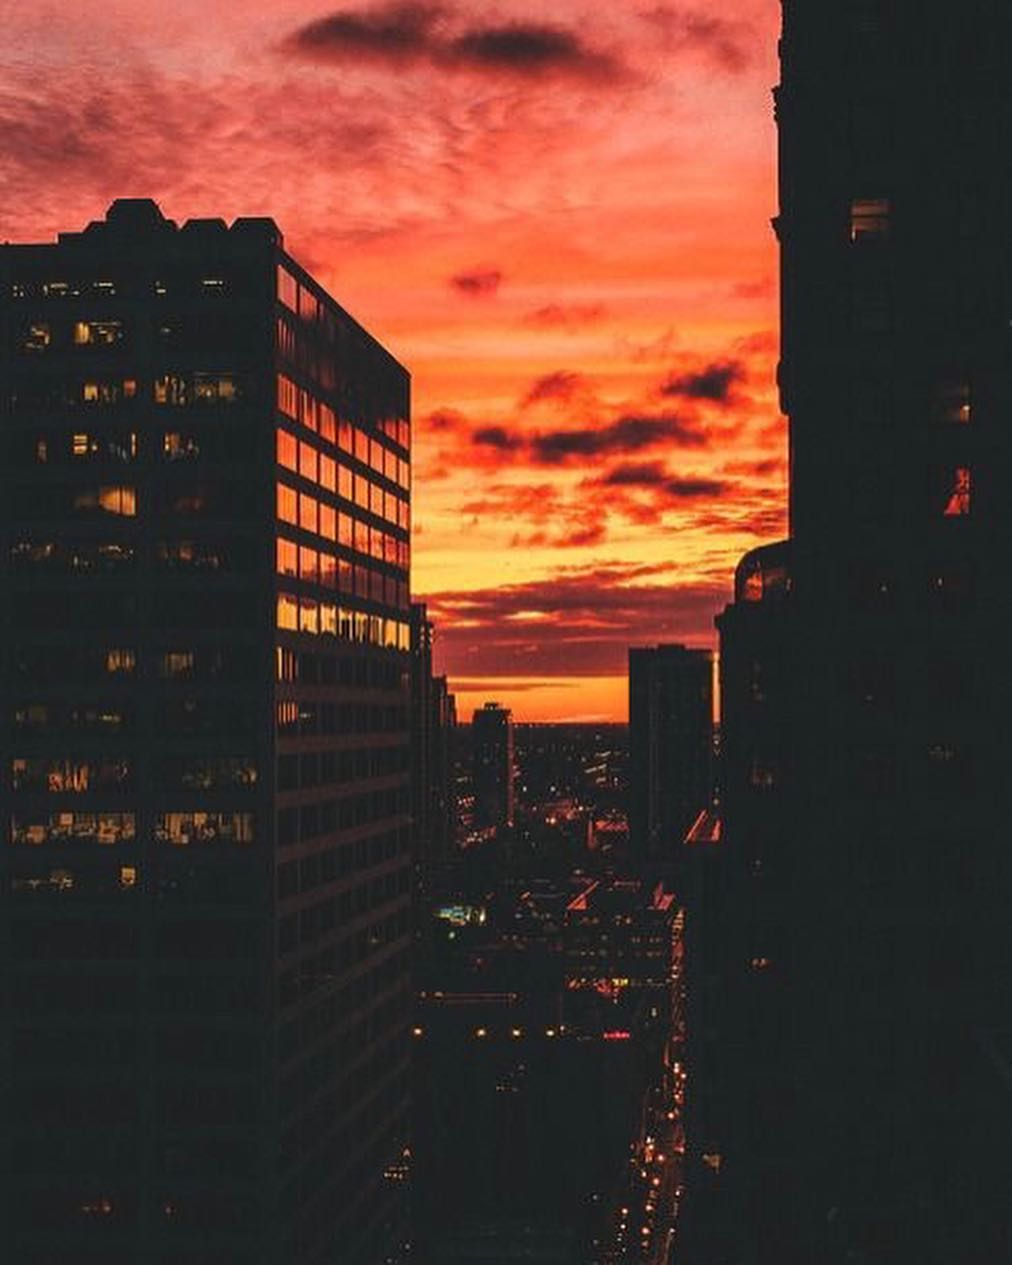 A beautiful sunset over a city - Dark orange